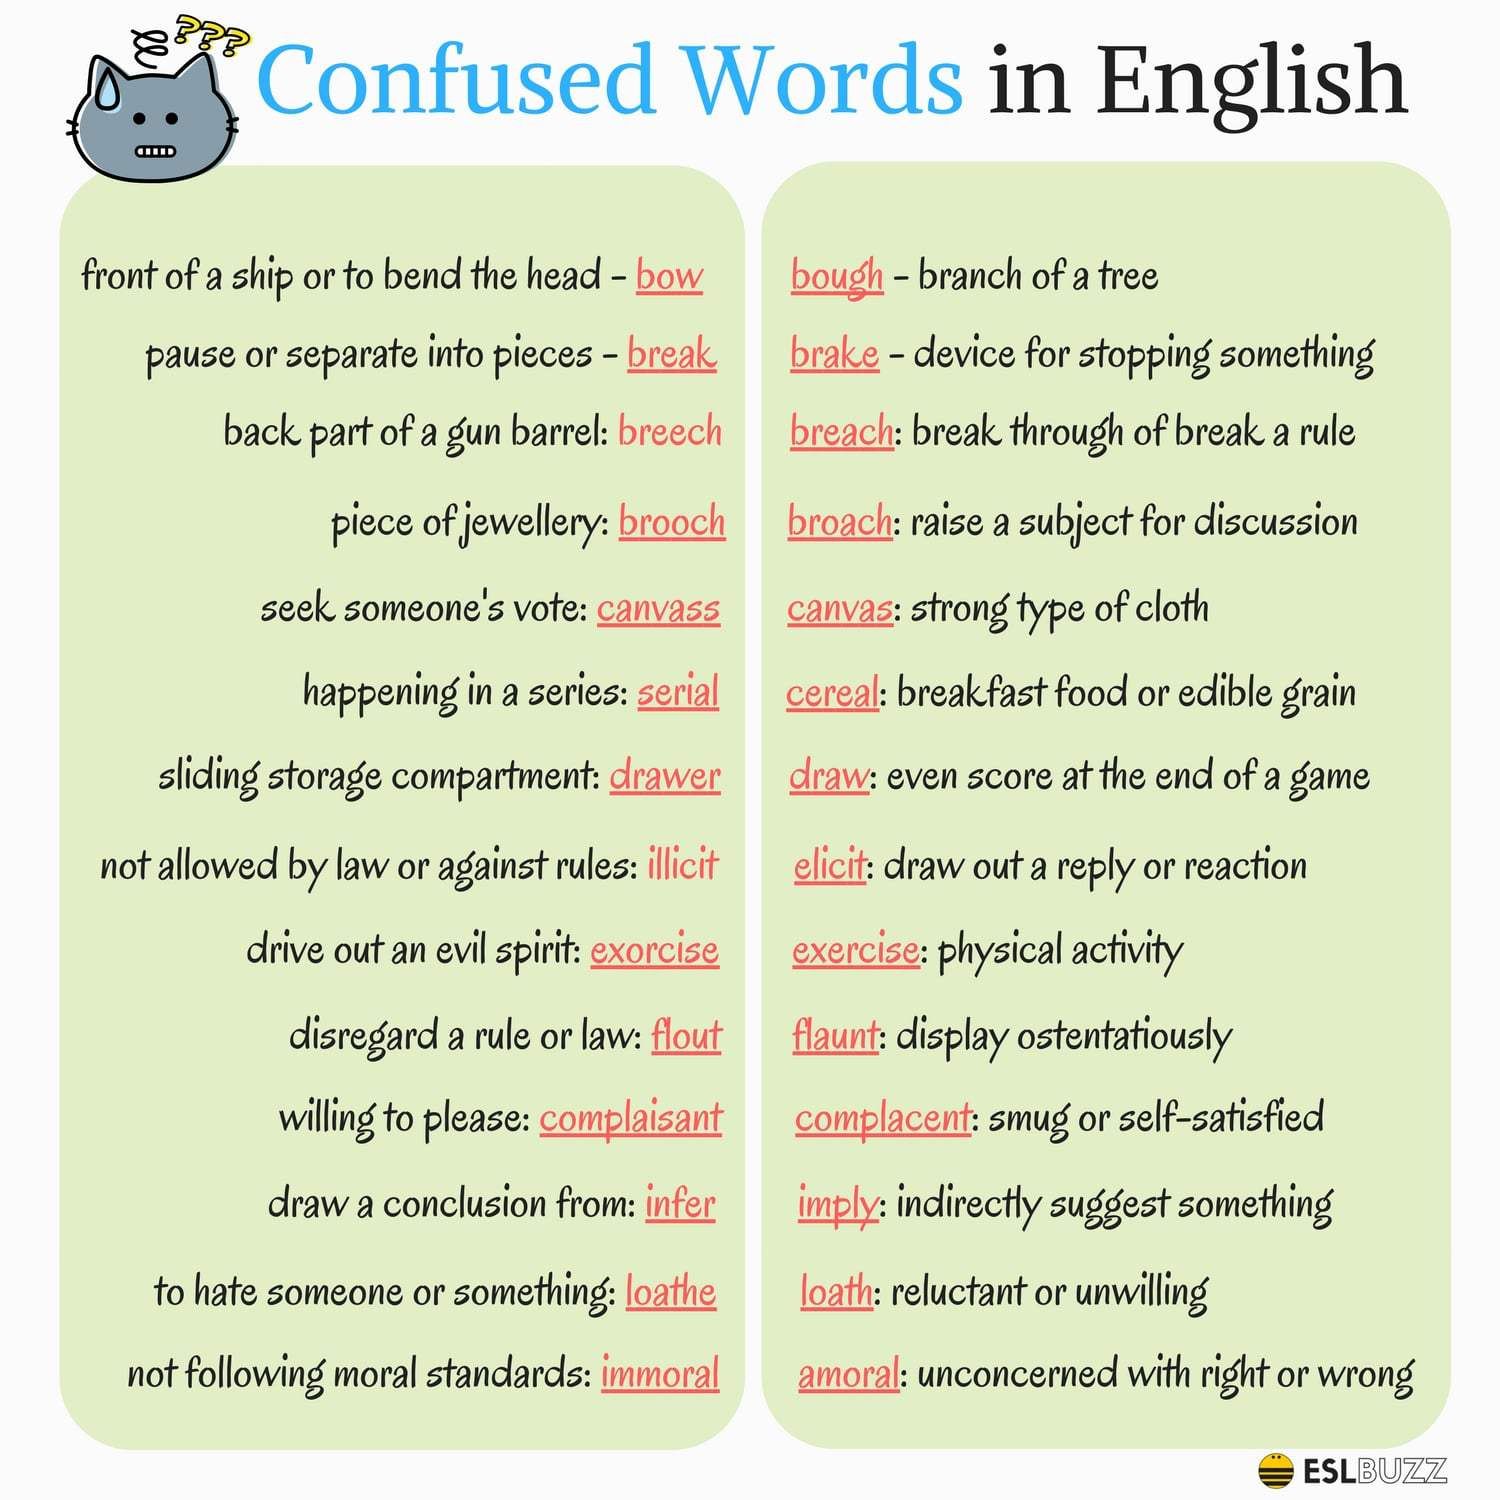 English idioms survey examples